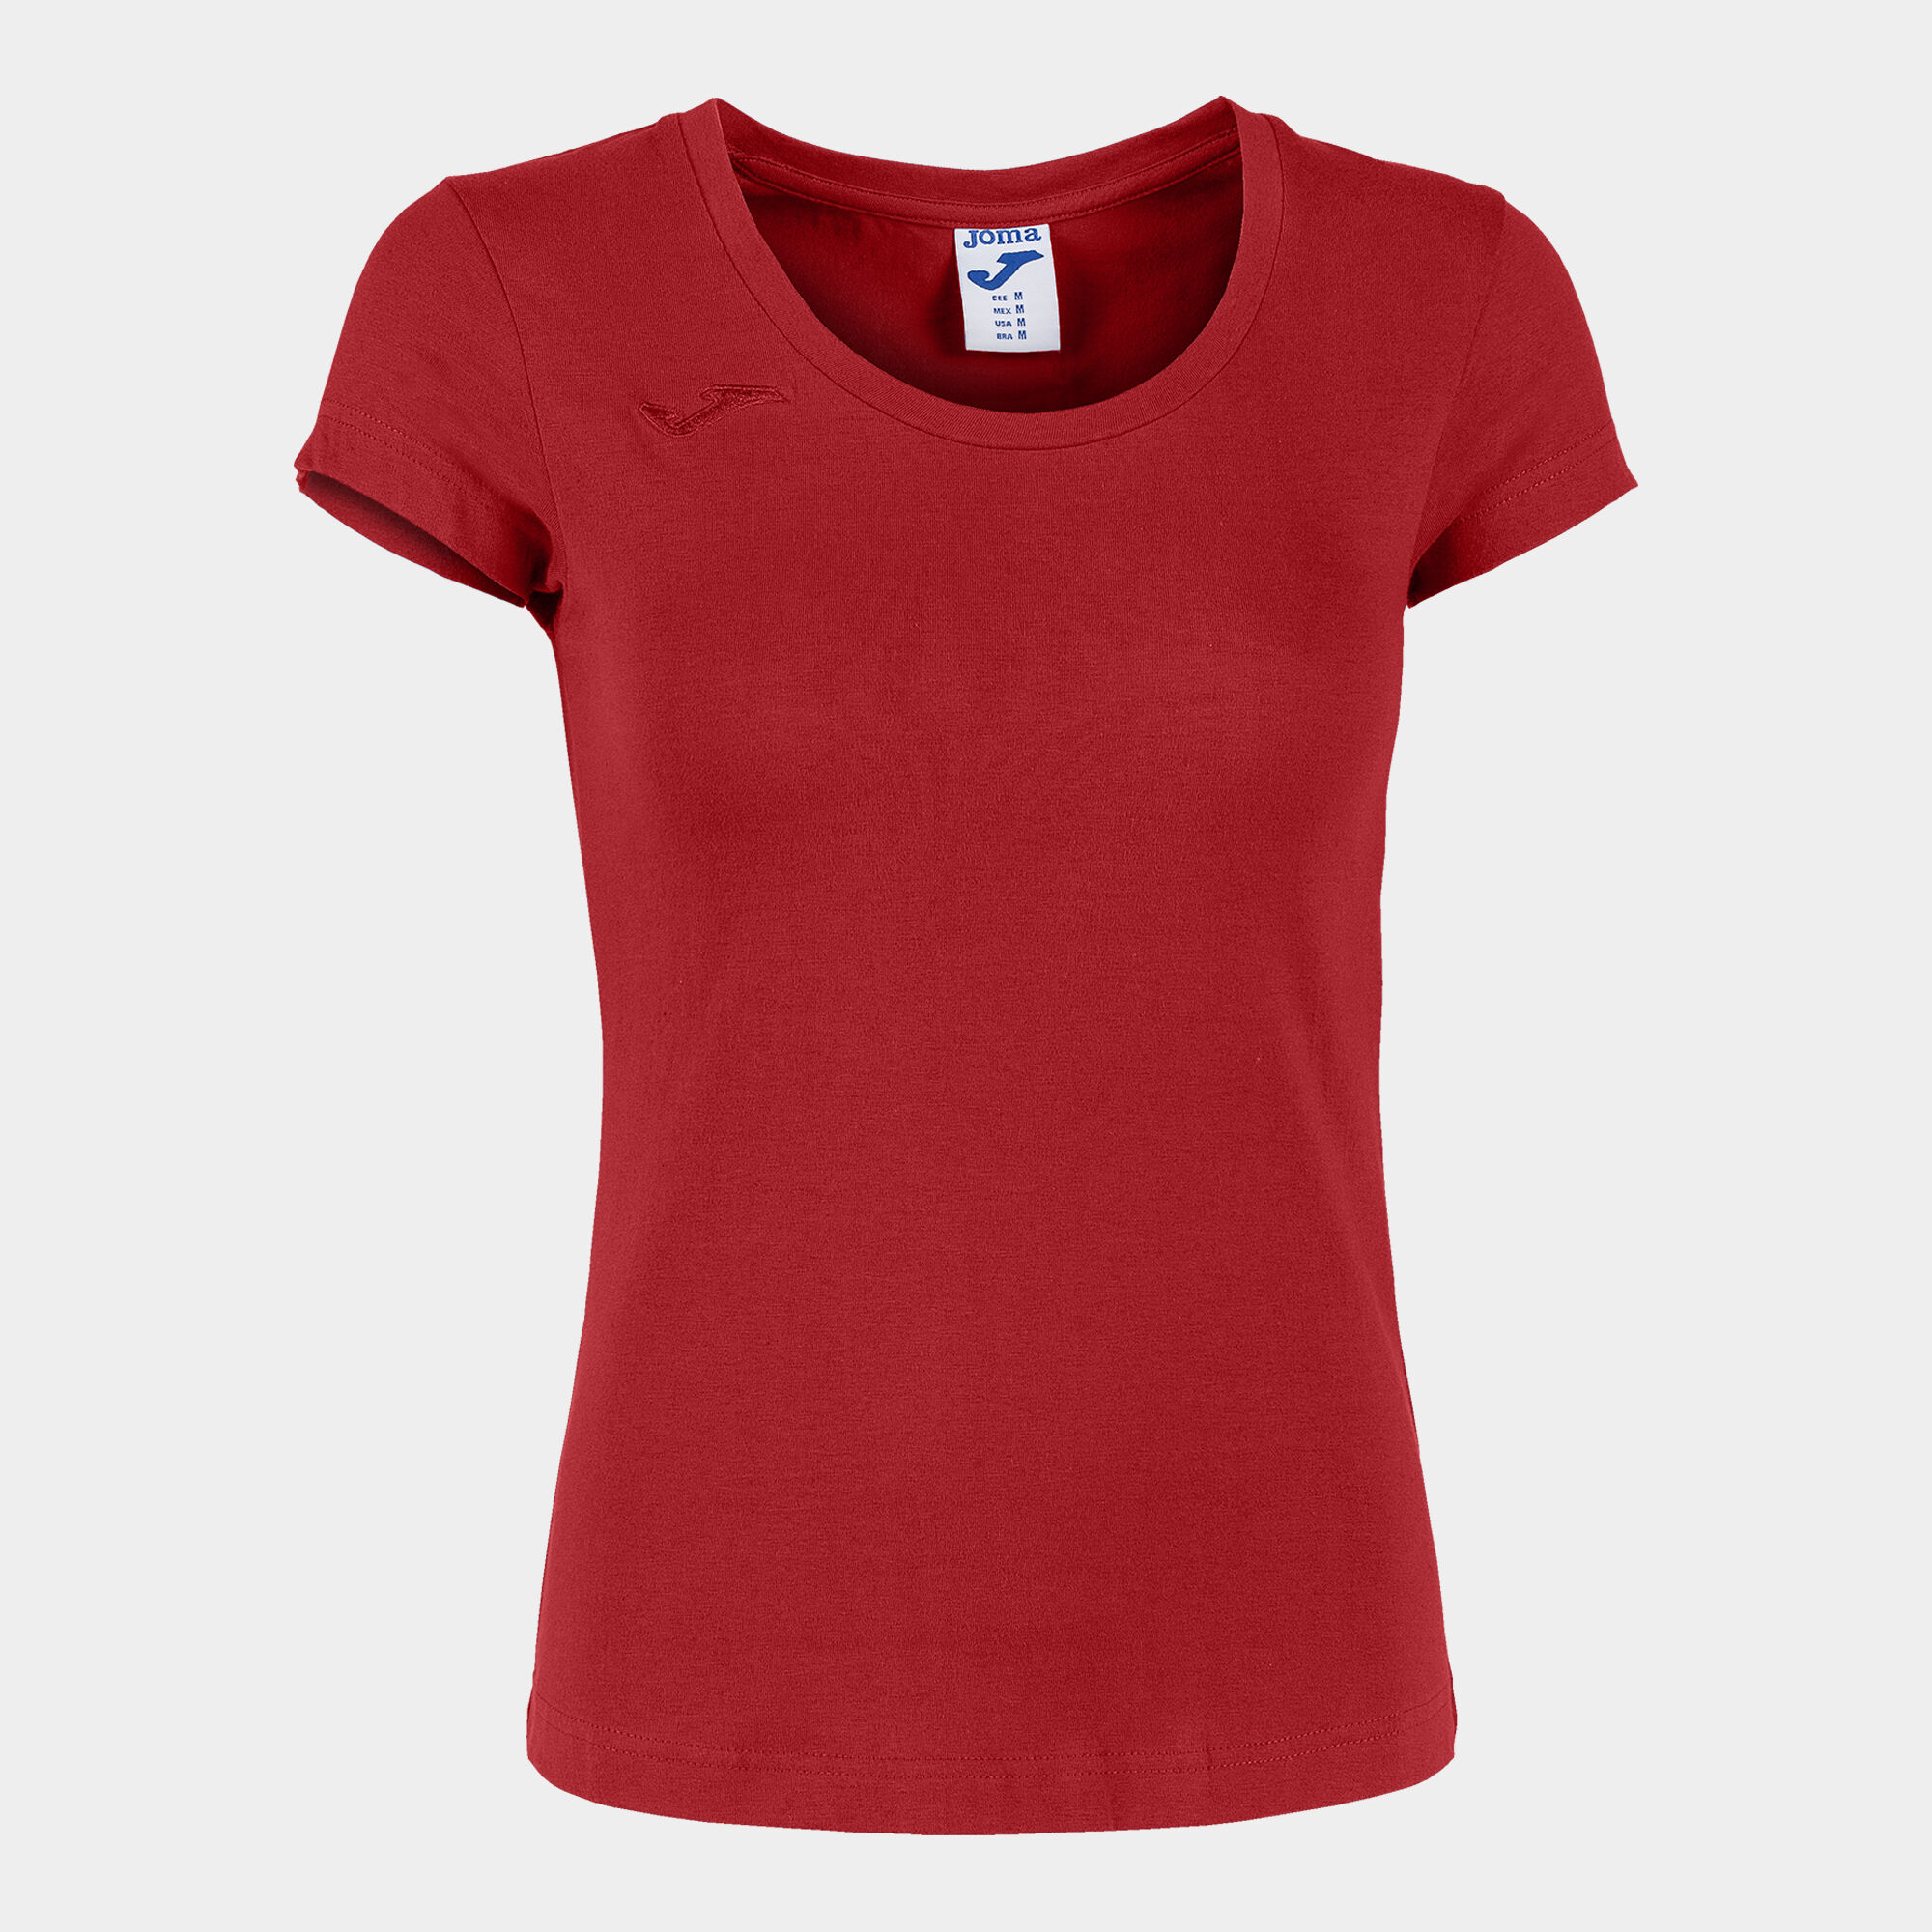 Shirt short sleeve woman Verona red